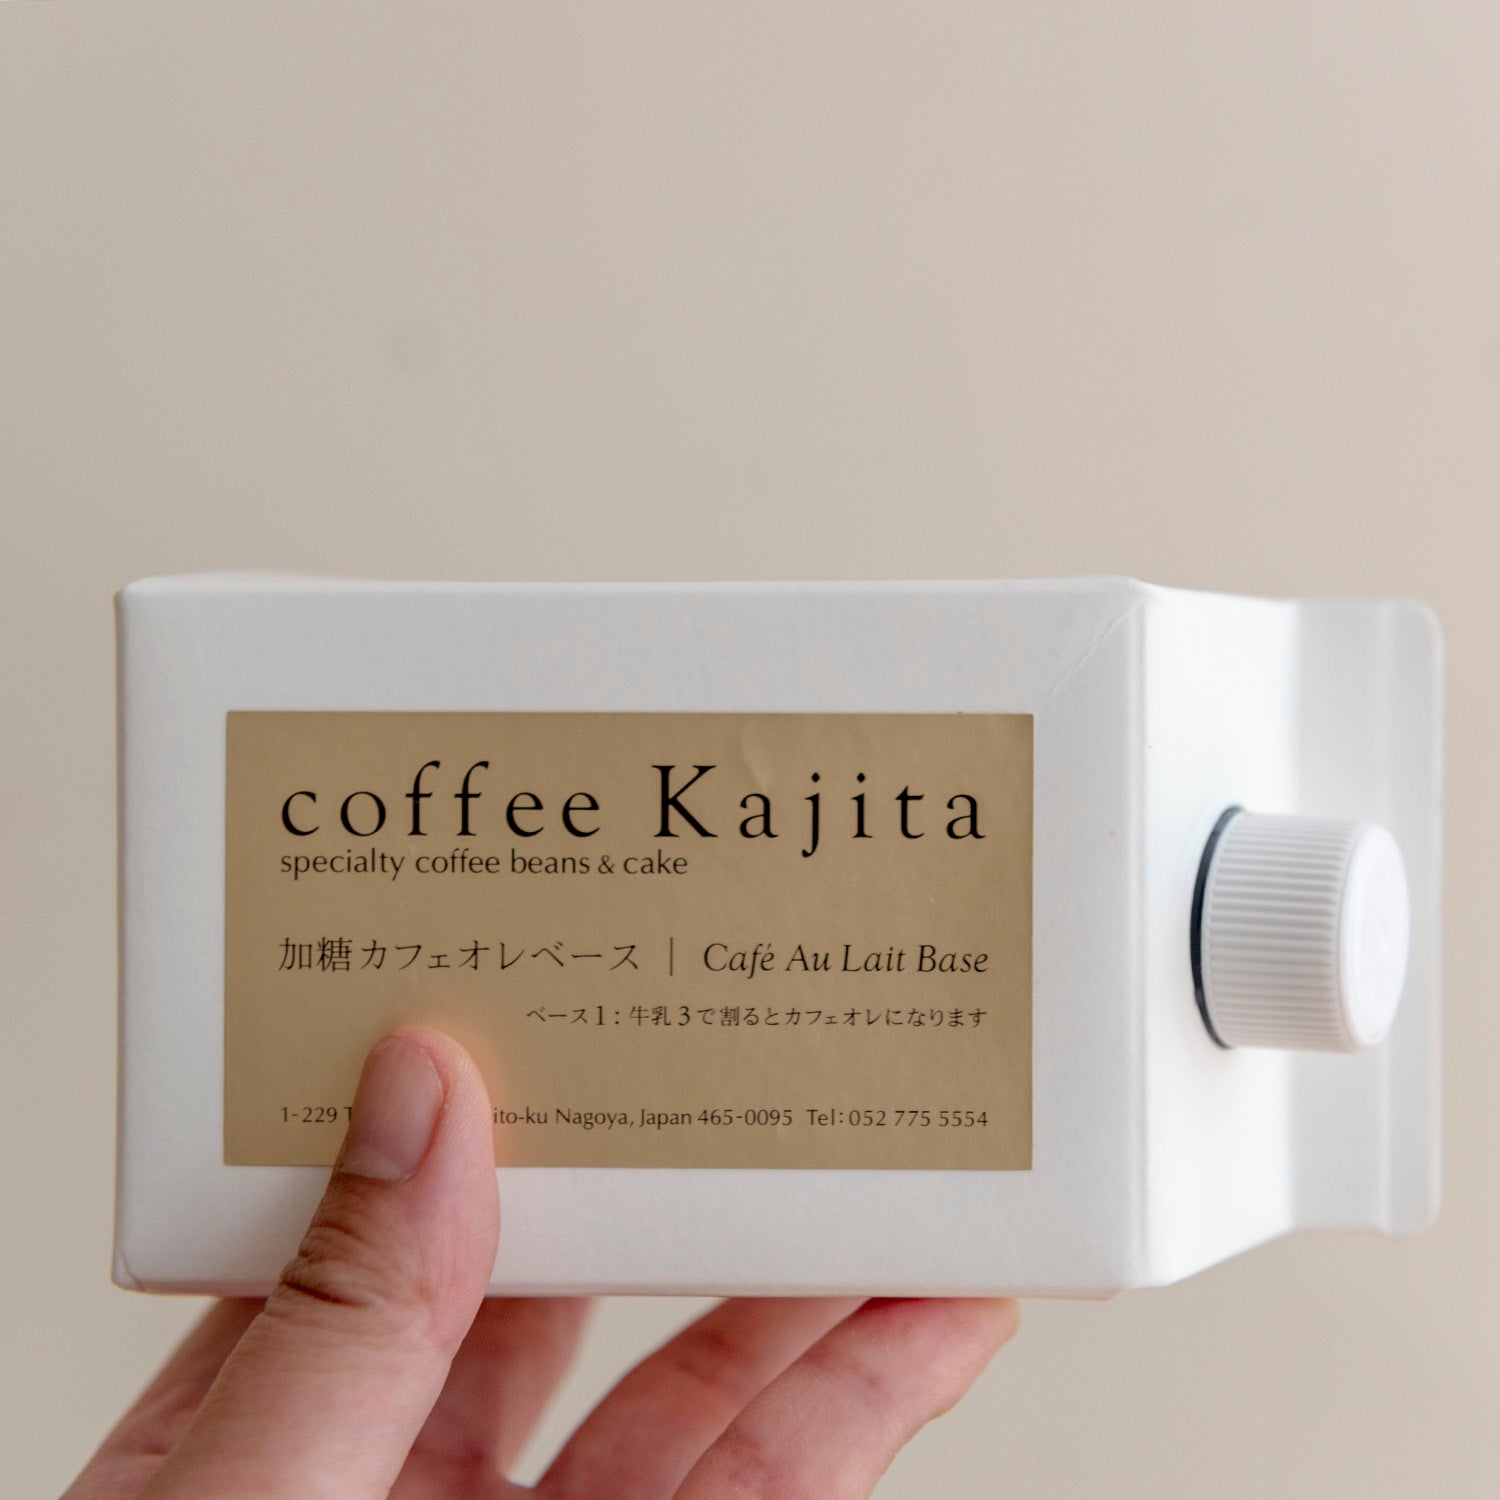 Coffee Kajita  Cafe Au Lait Base